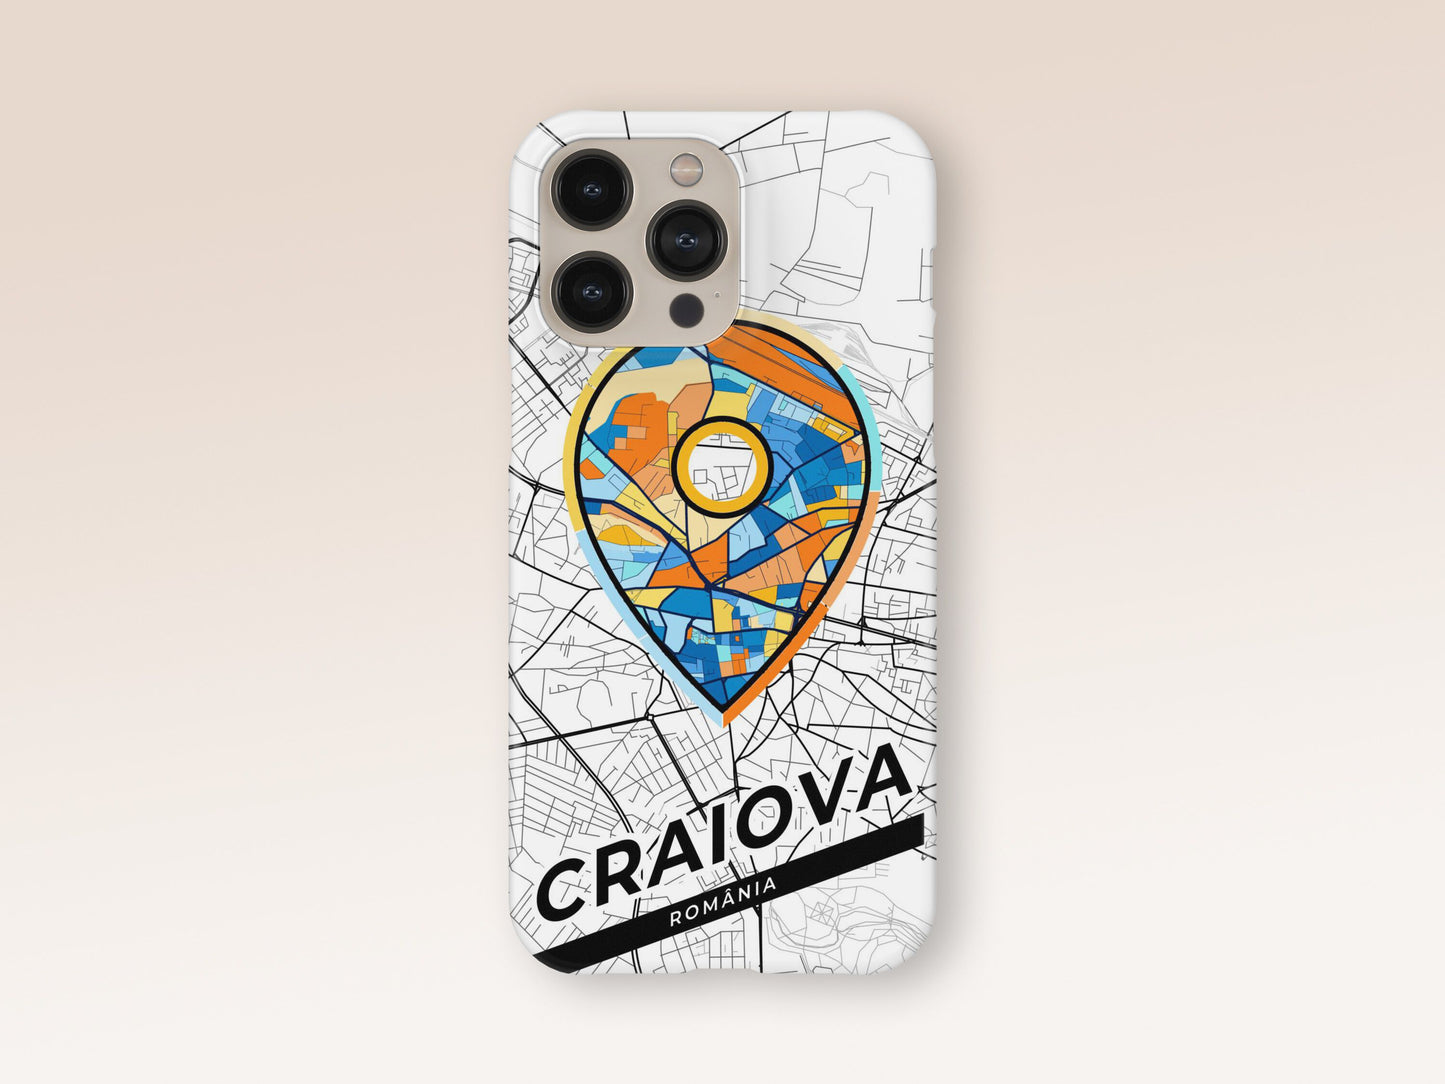 Craiova Romania slim phone case with colorful icon. Birthday, wedding or housewarming gift. Couple match cases. 1